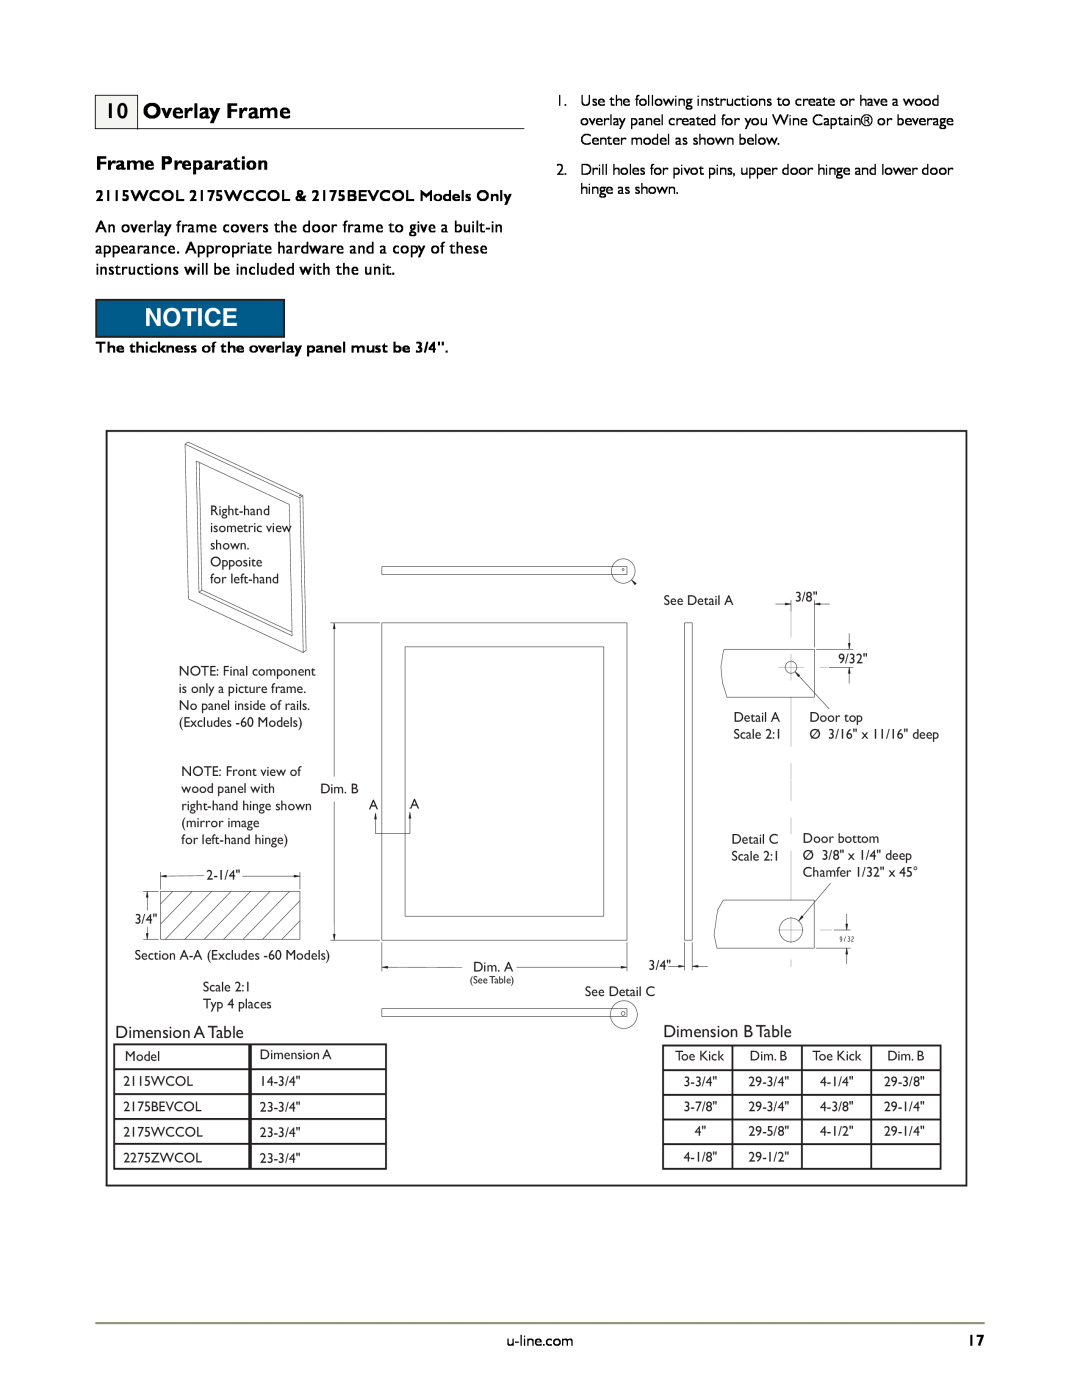 U-Line U-2175RSOD-01 manual Overlay Frame, Frame Preparation, Dimension ATable, 2115WCOL 2175WCCOL & 2175BEVCOL Models Only 